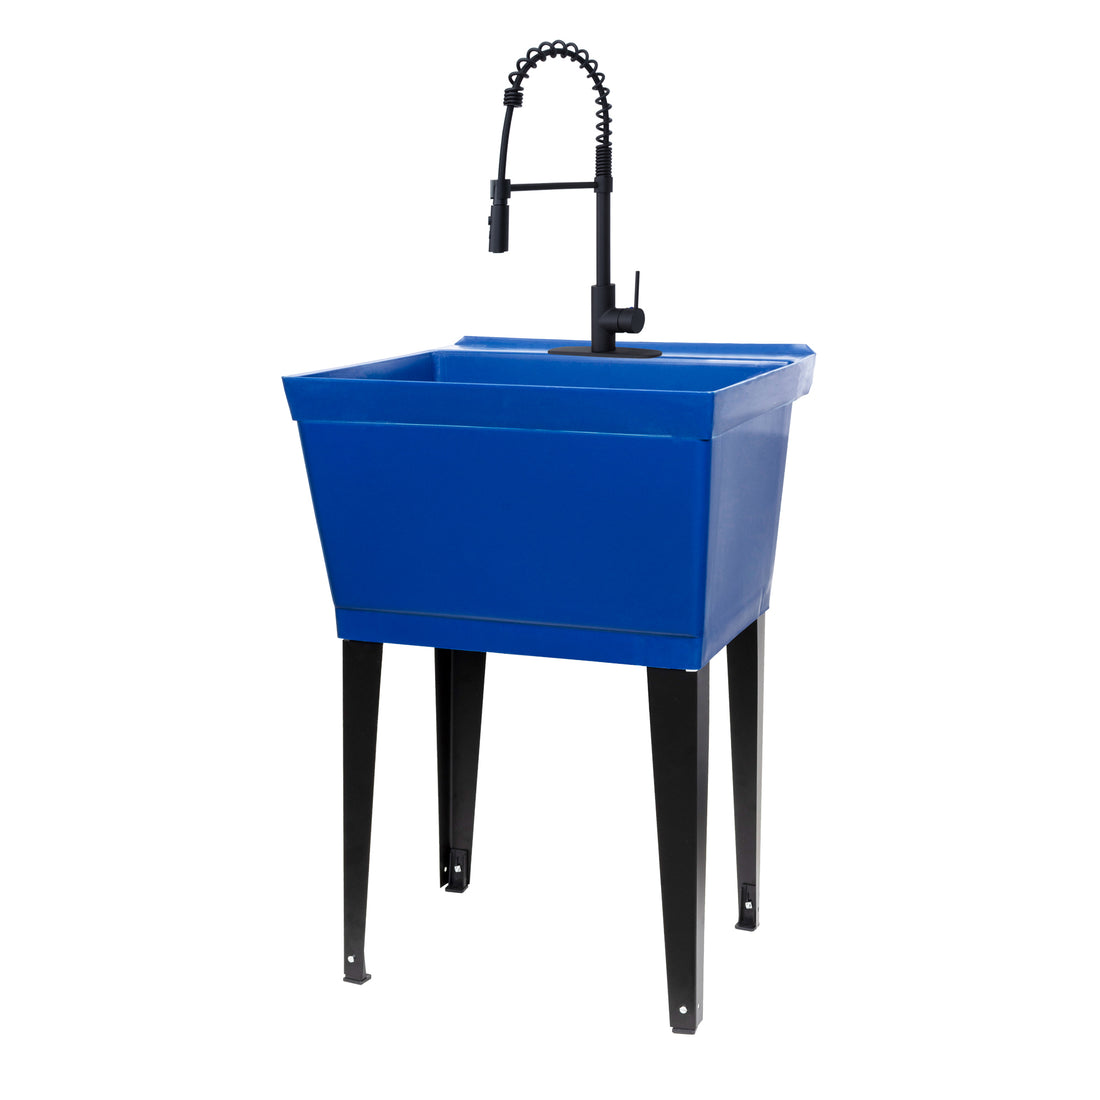 Tehila Standard Freestanding Blue Utility Sink with Black Finish High-Arc Coil Pull-Down Faucet - Utility sinks vanites Tehila